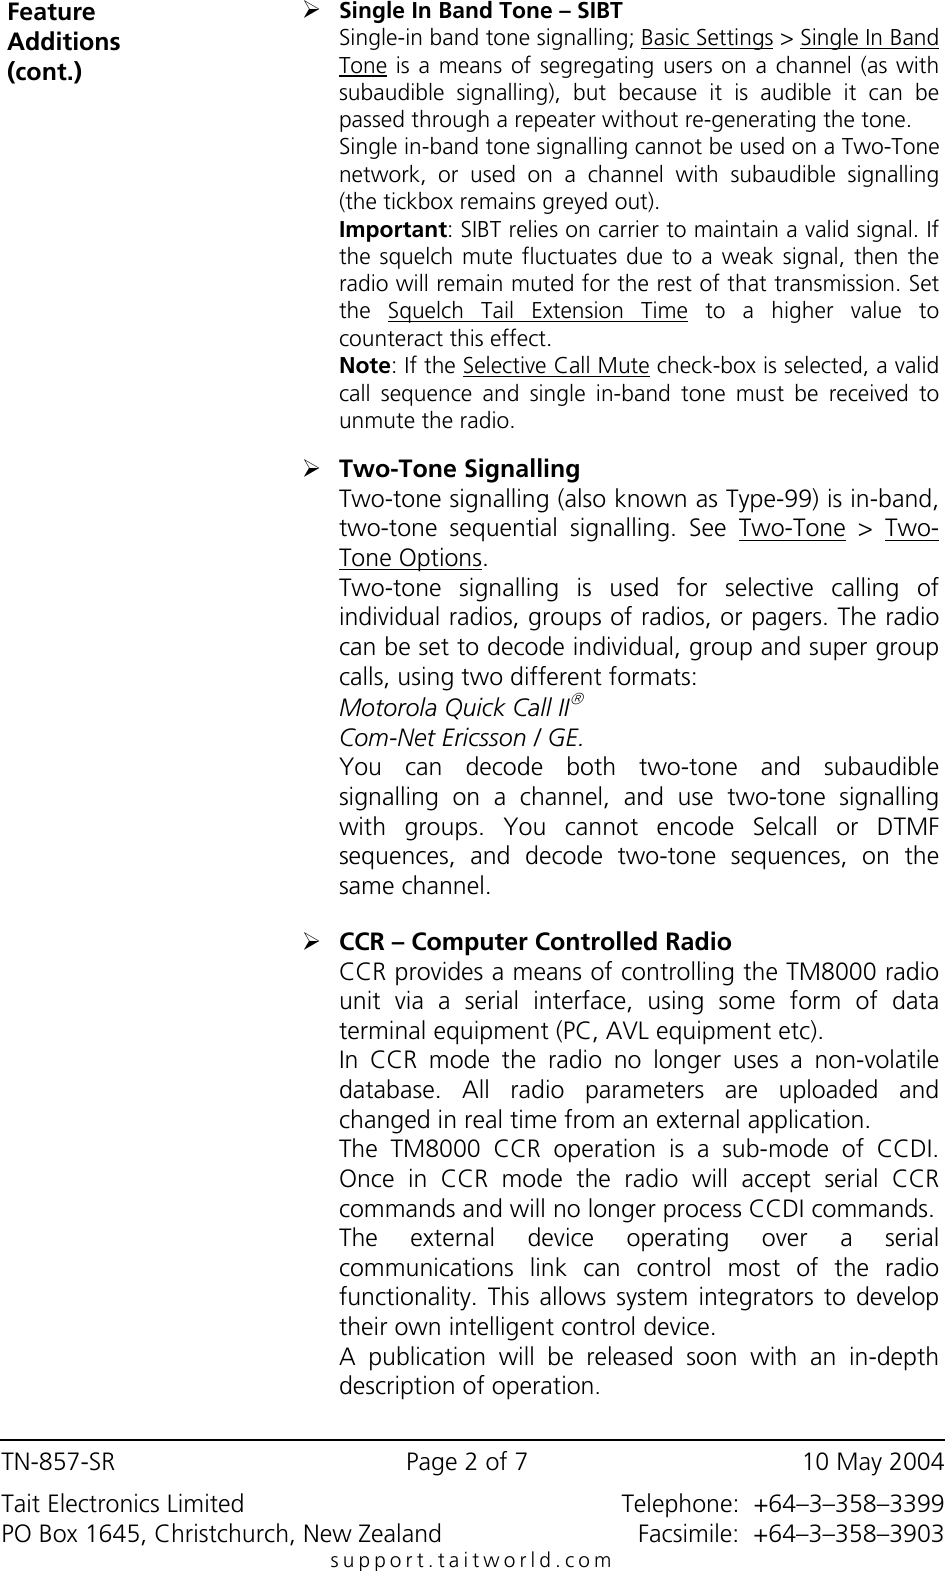 Page 2 of 7 - TECHNOTE/TM8000/TN-857b SR_TM8000 Release 3 And Upgrade Instructions TN-857b SR TM8000